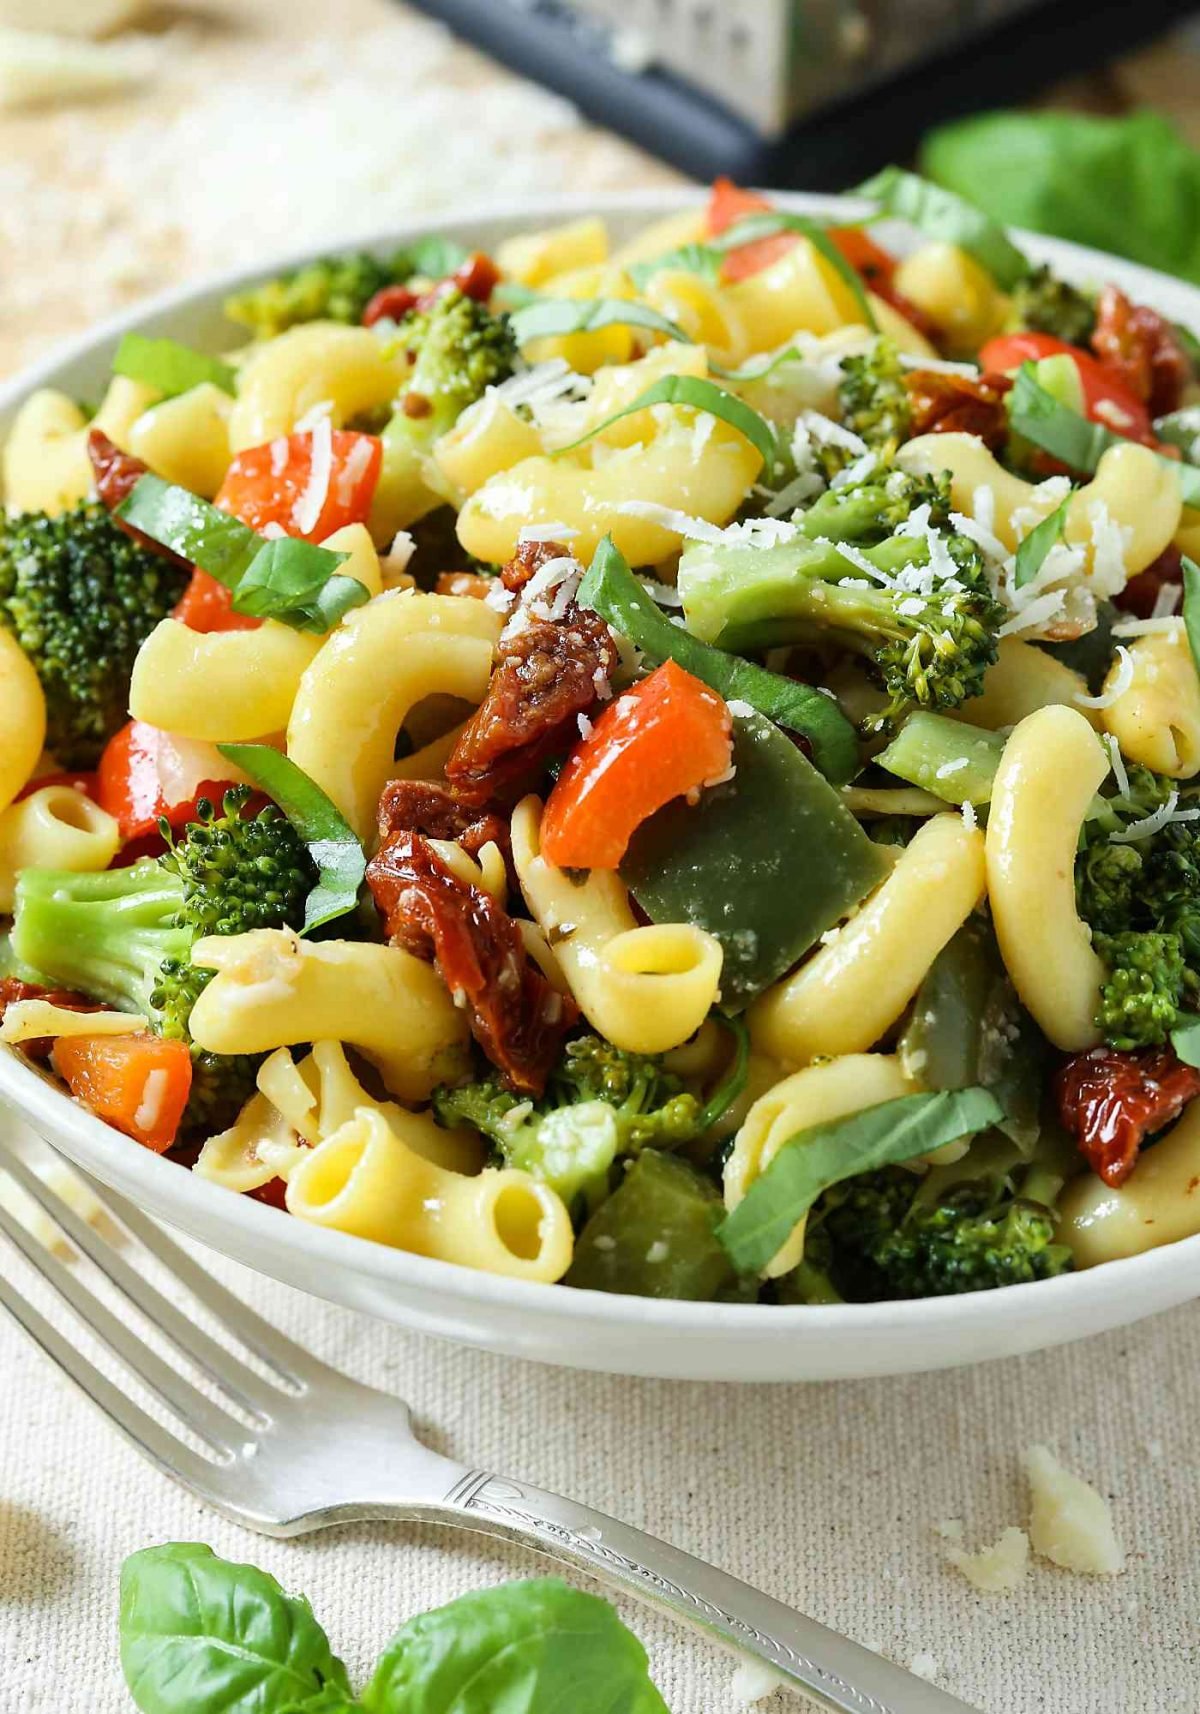 Stir-Fry-Vegetable-Pasta-Salad-Watch-What-U-Eat-3 | Watch What U Eat